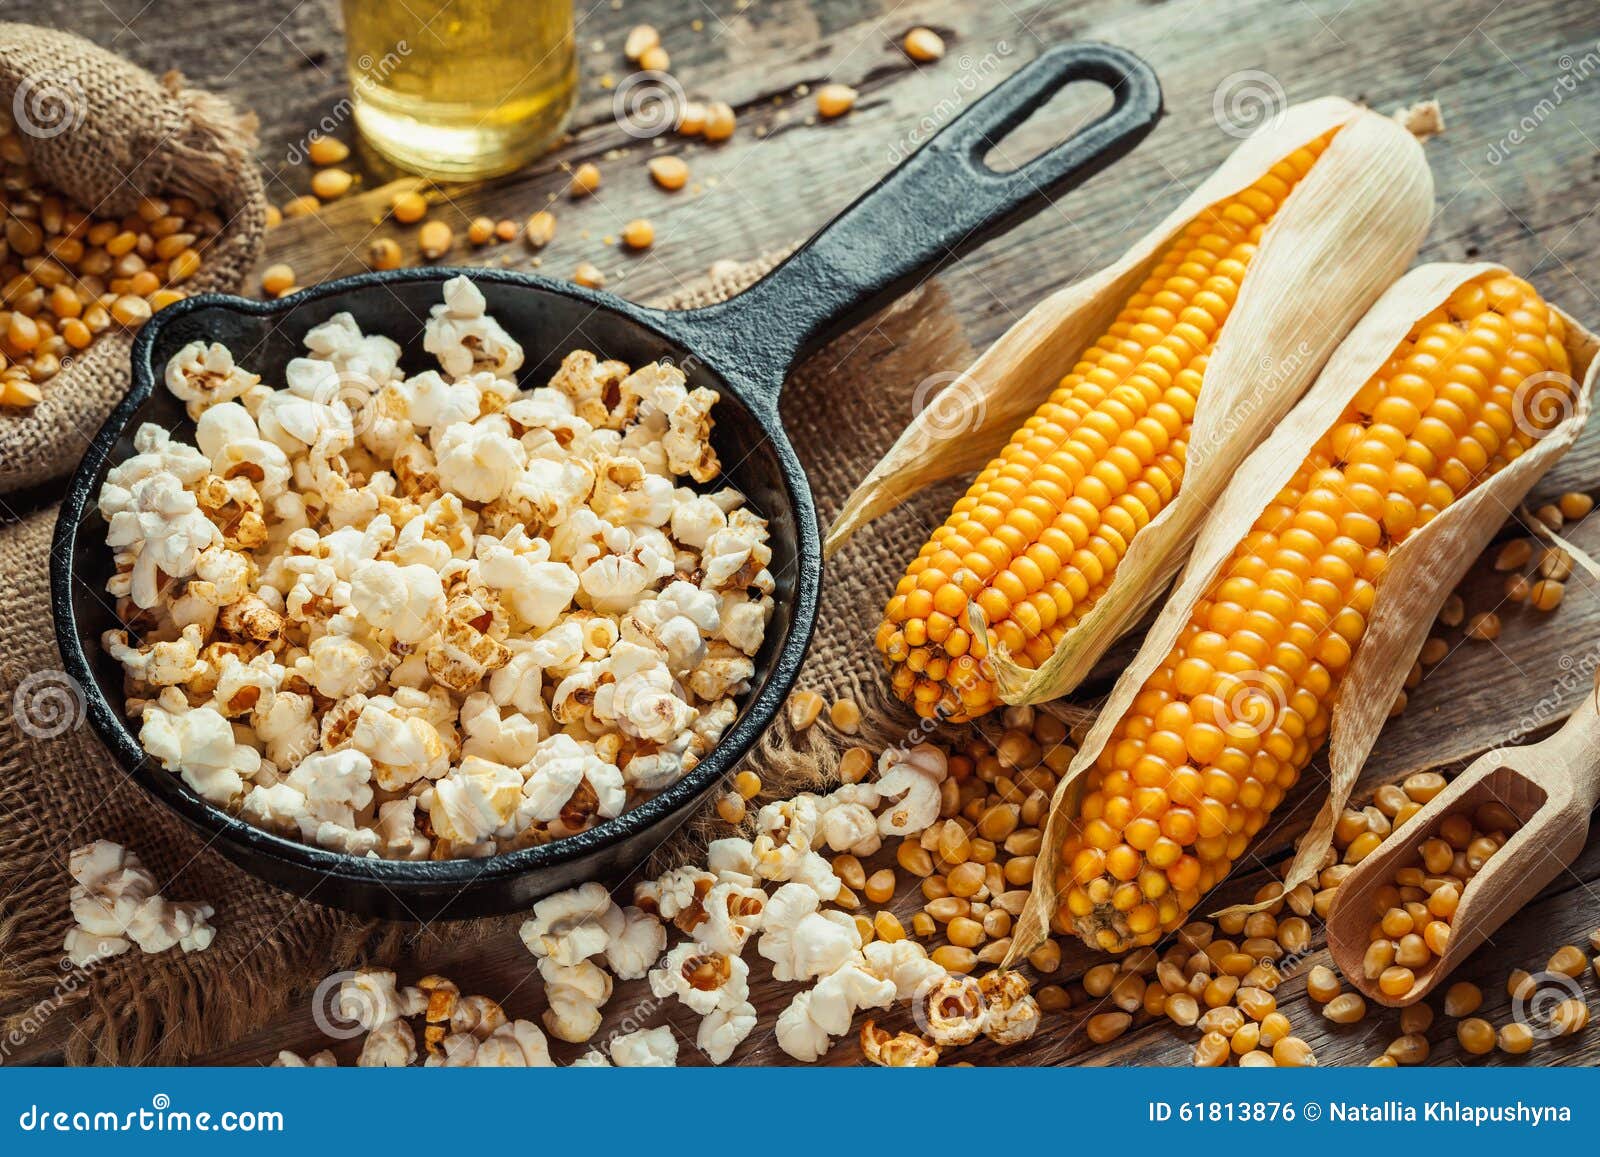 prepared popcorn in frying pan, corn seeds and corncobs